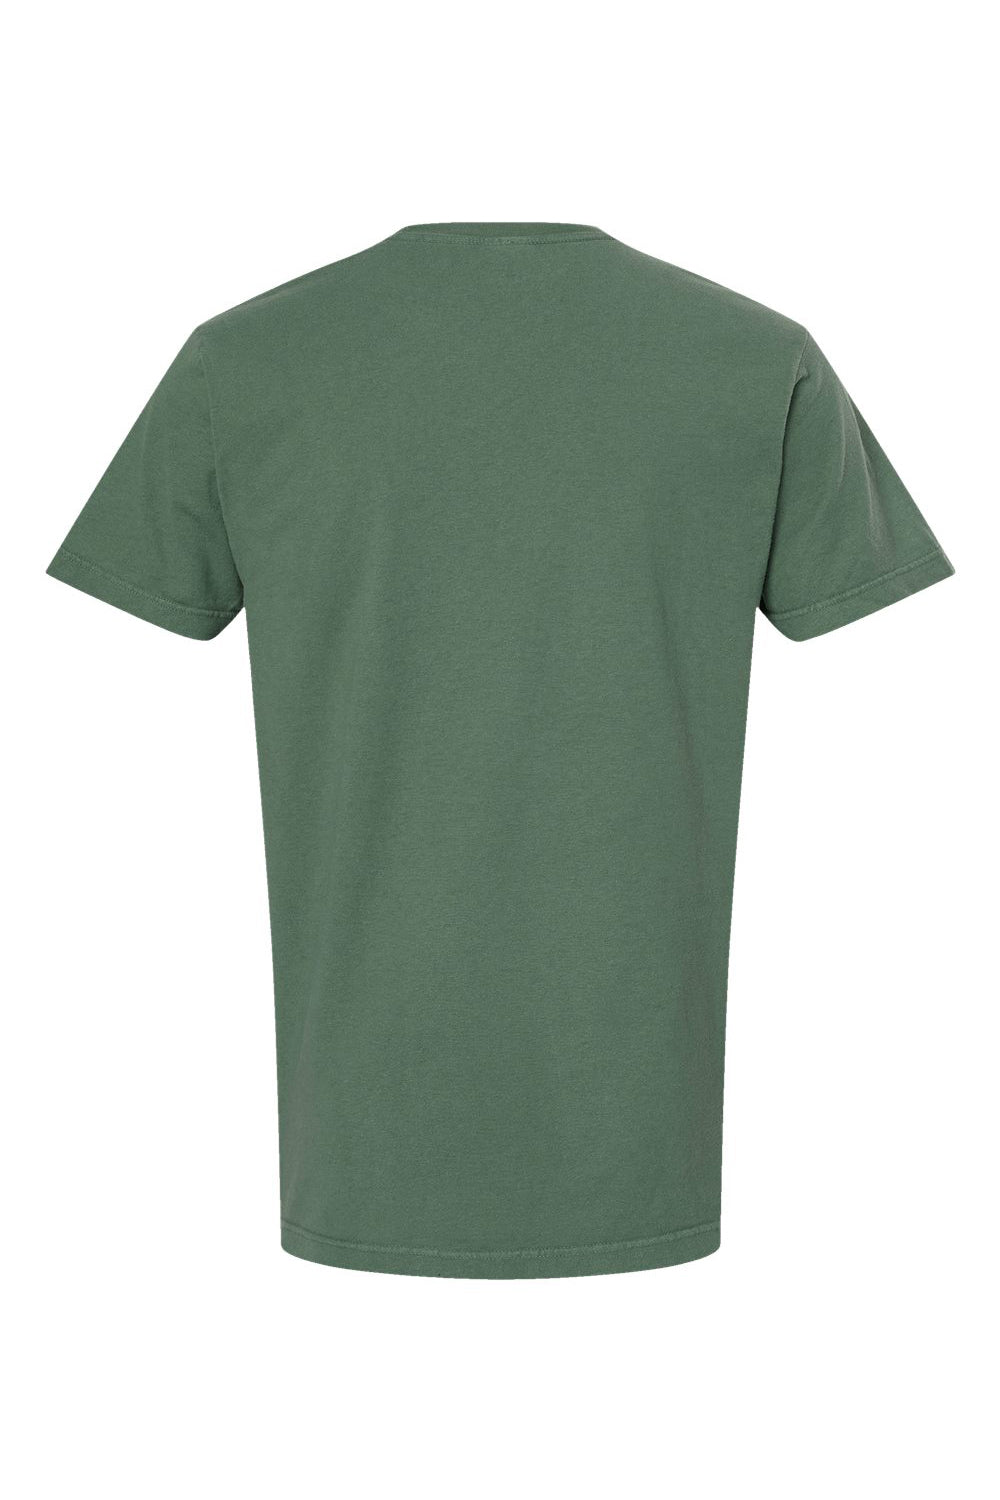 M&O 6500M Mens Vintage Garment Dyed Short Sleeve Crewneck T-Shirt Light Green Flat Back